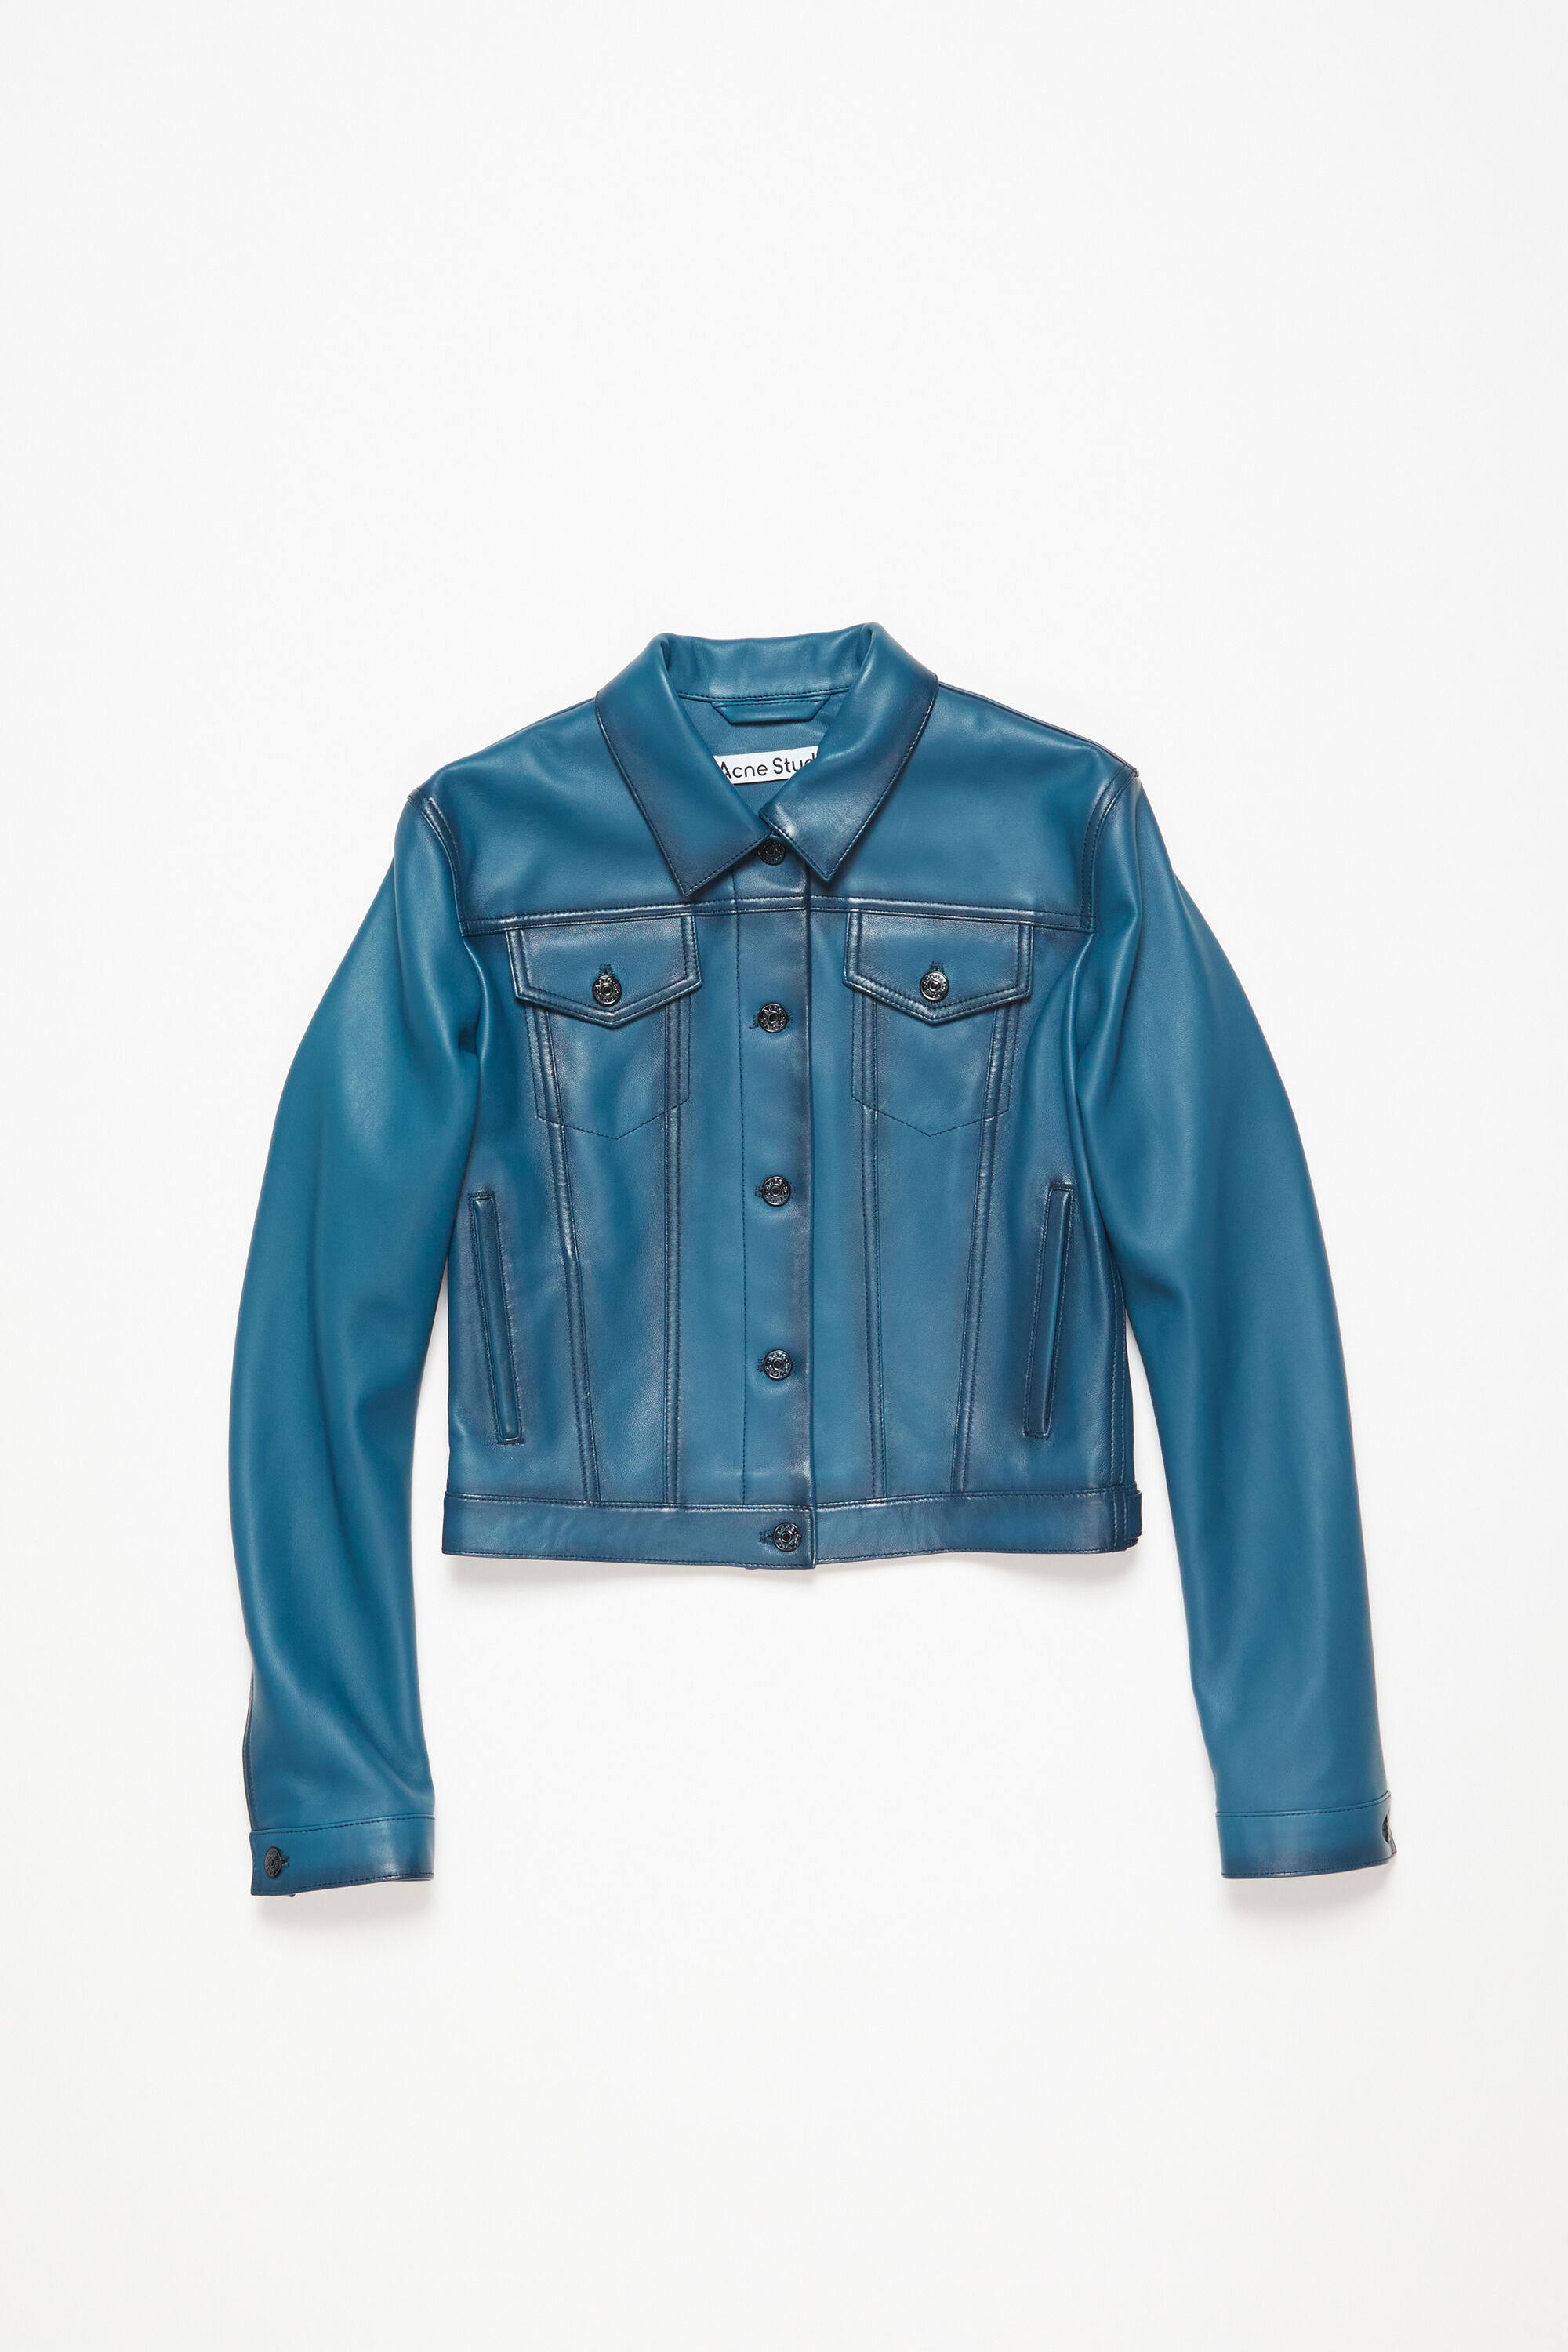 Acne Studios - Leather jacket - Blue